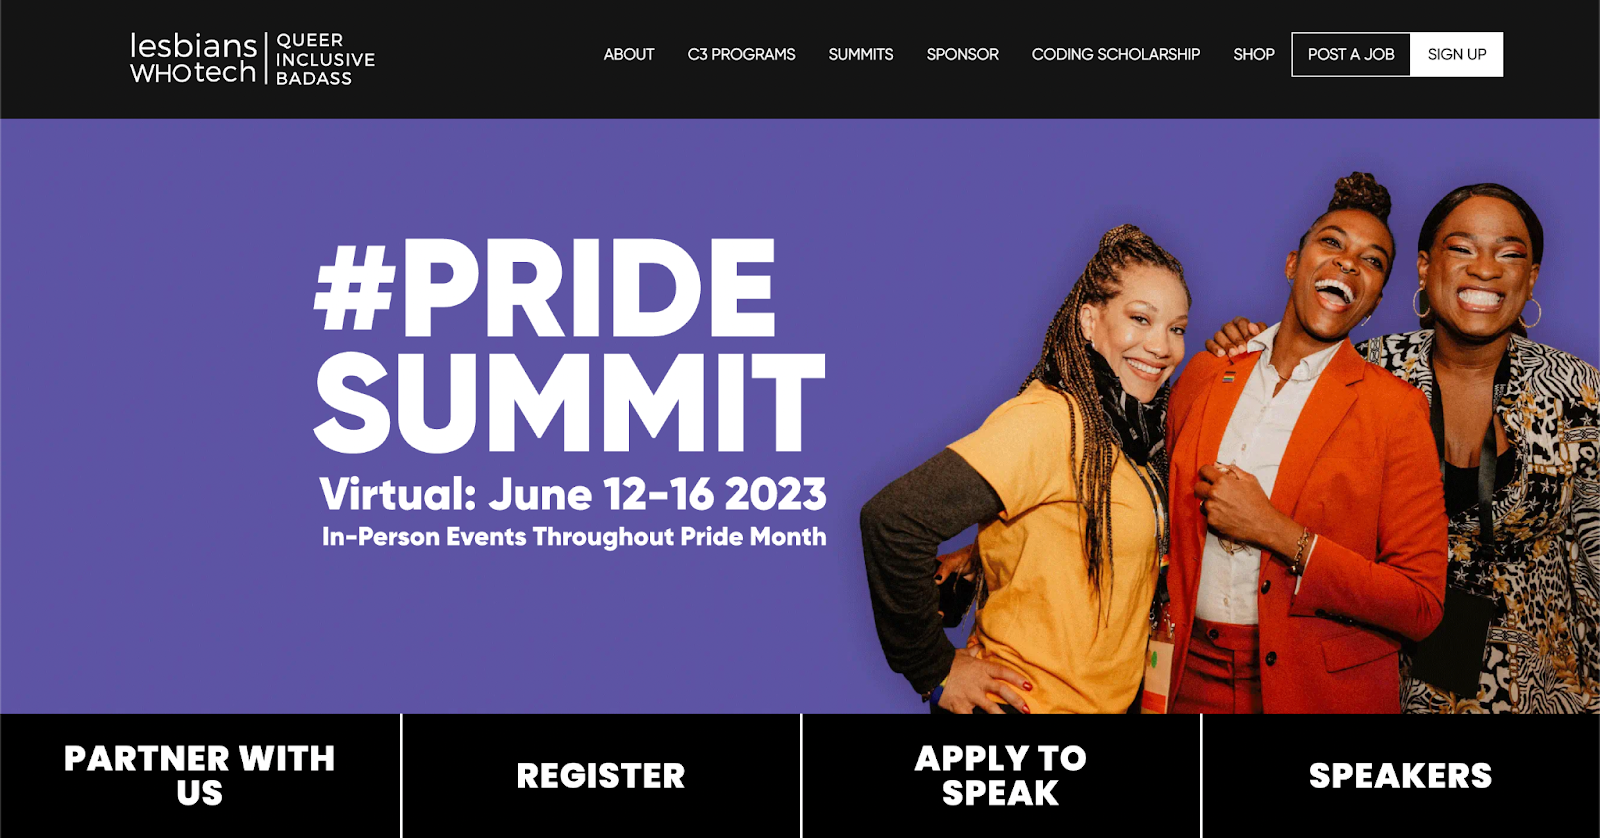 event website examples, pride summit